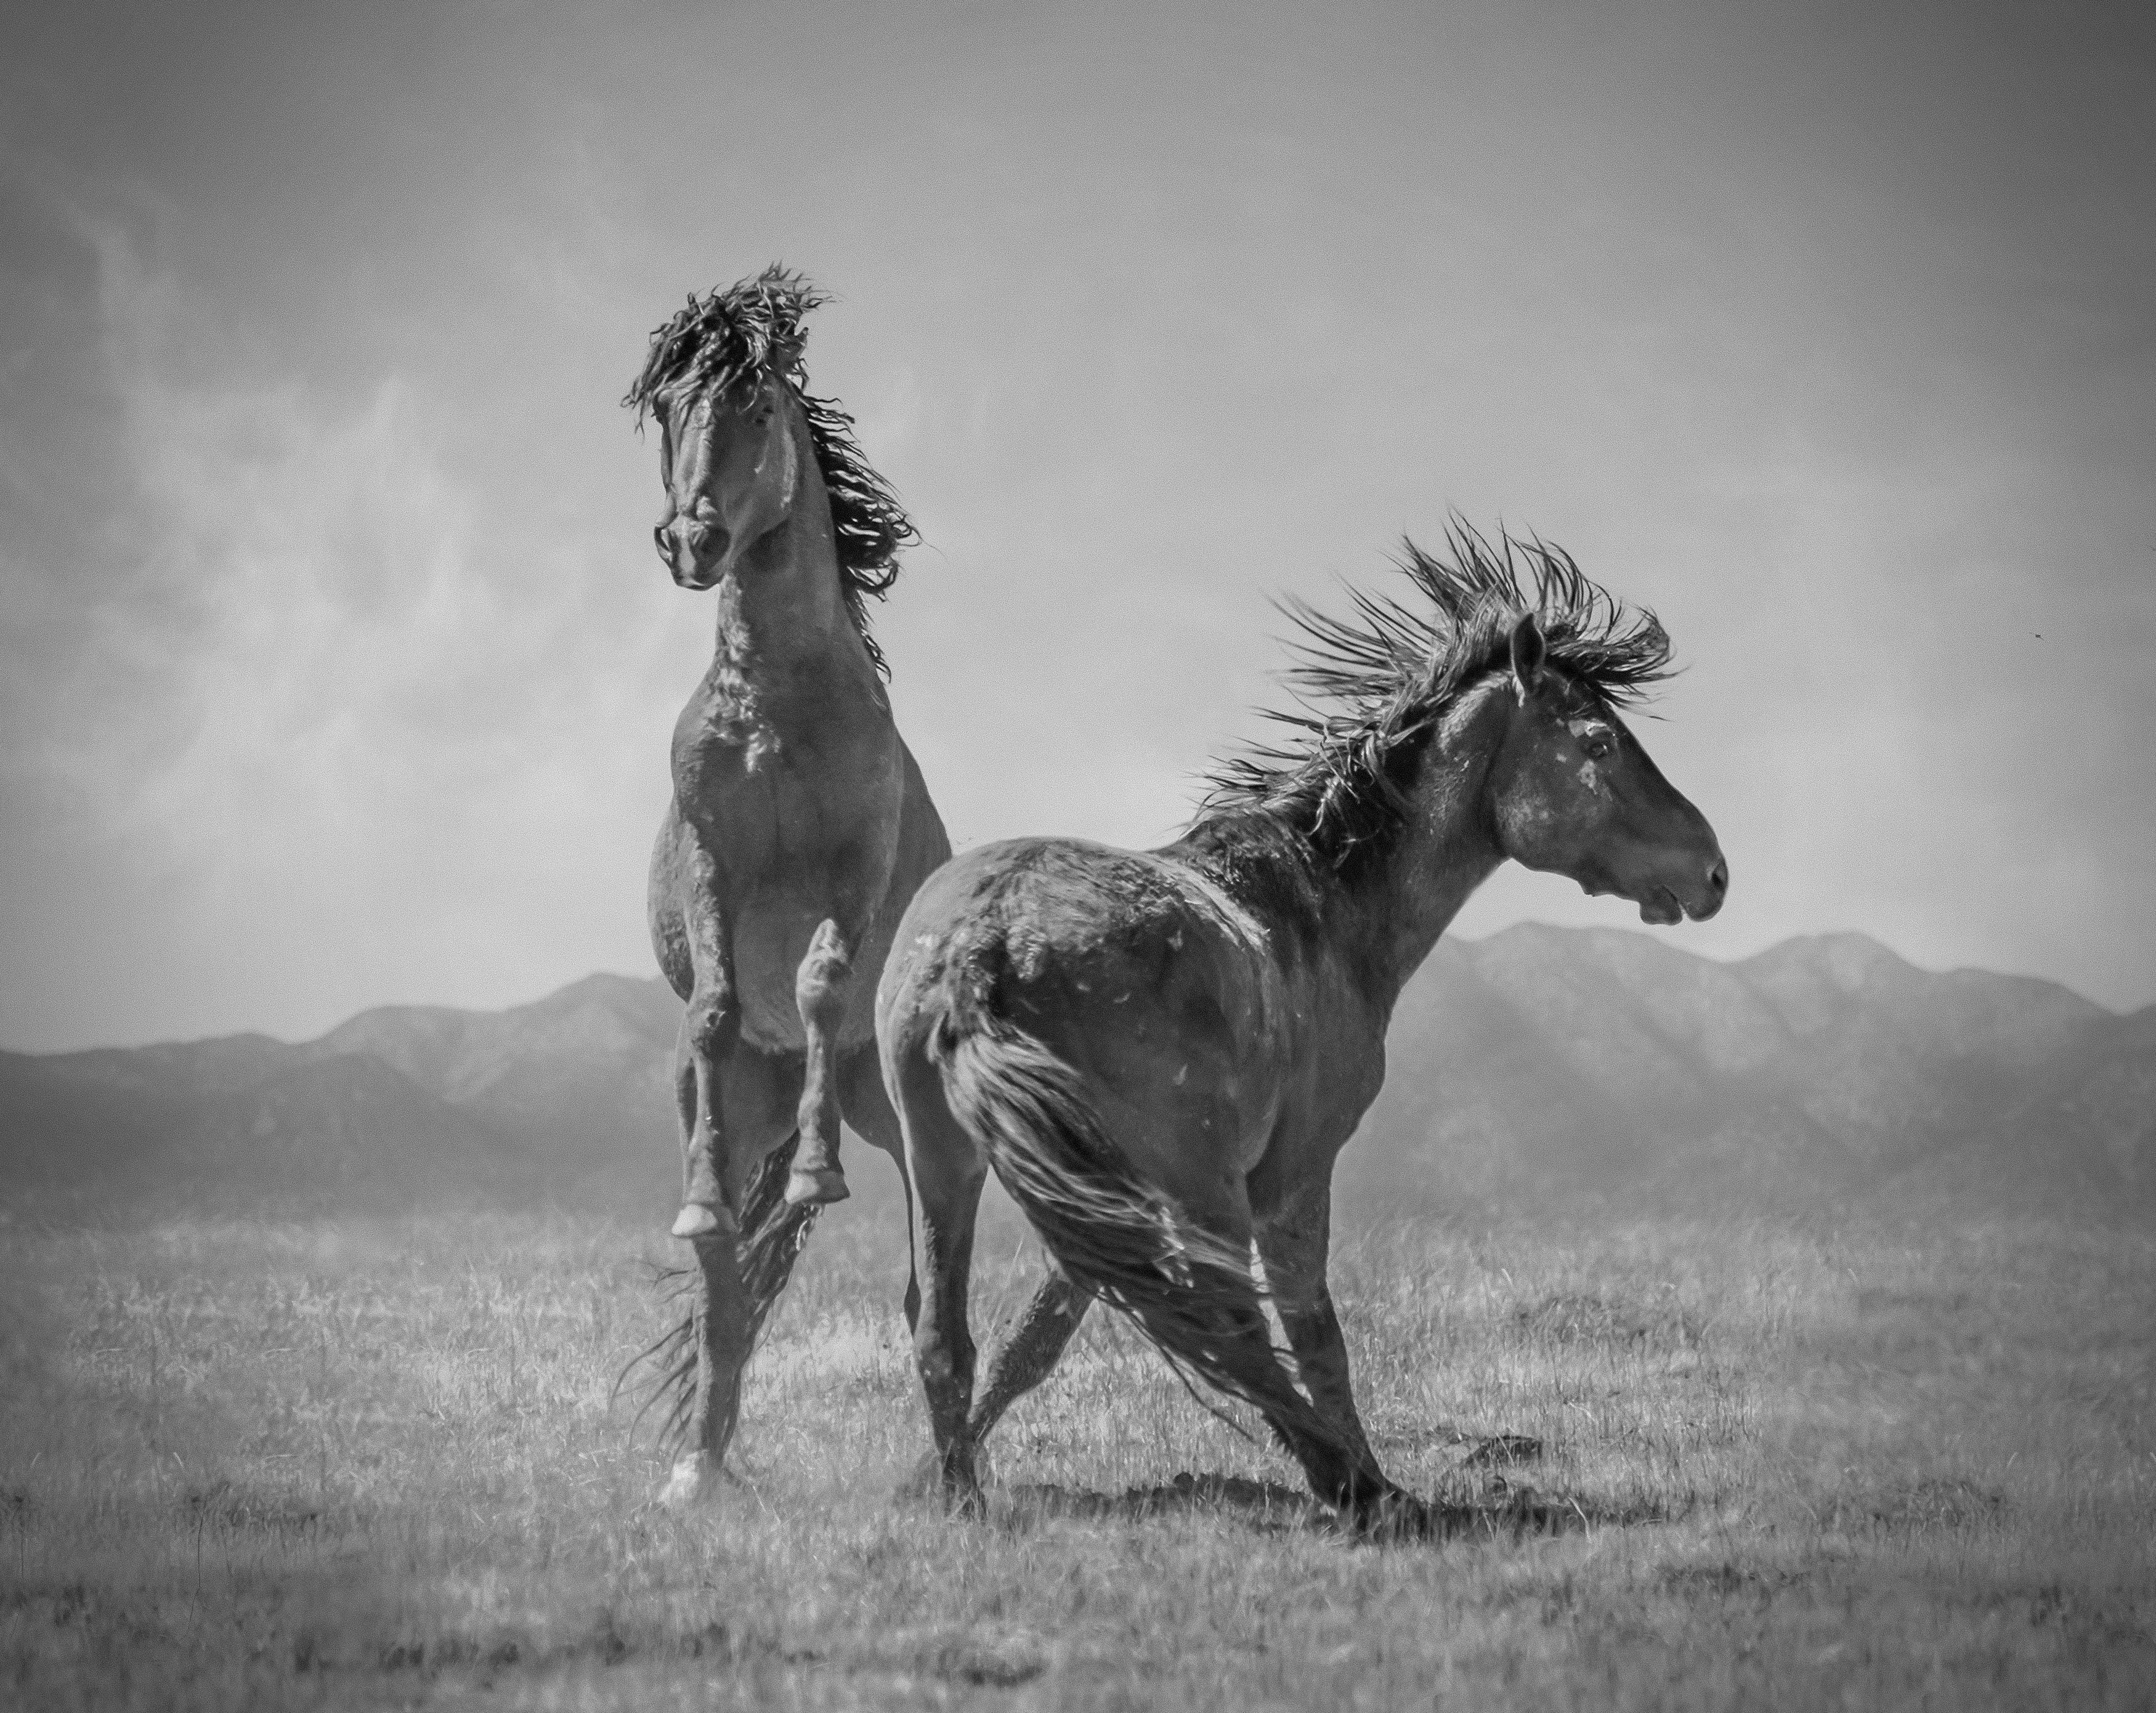 Shane Russeck Animal Print - "Wonder Horses" 20x30 - Black & White Photography, Wild Horses Mustangs 